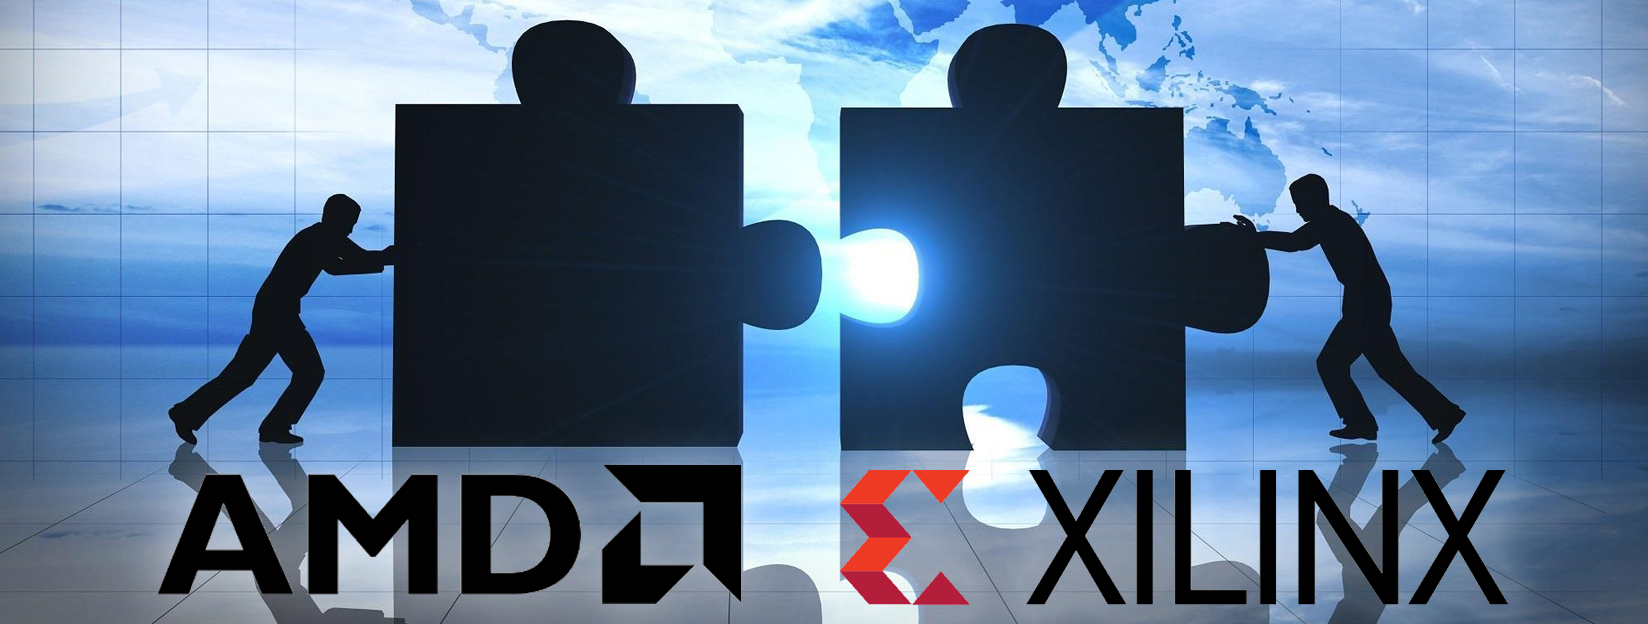 AMD in $35 Billion Acquisition of Xilinx